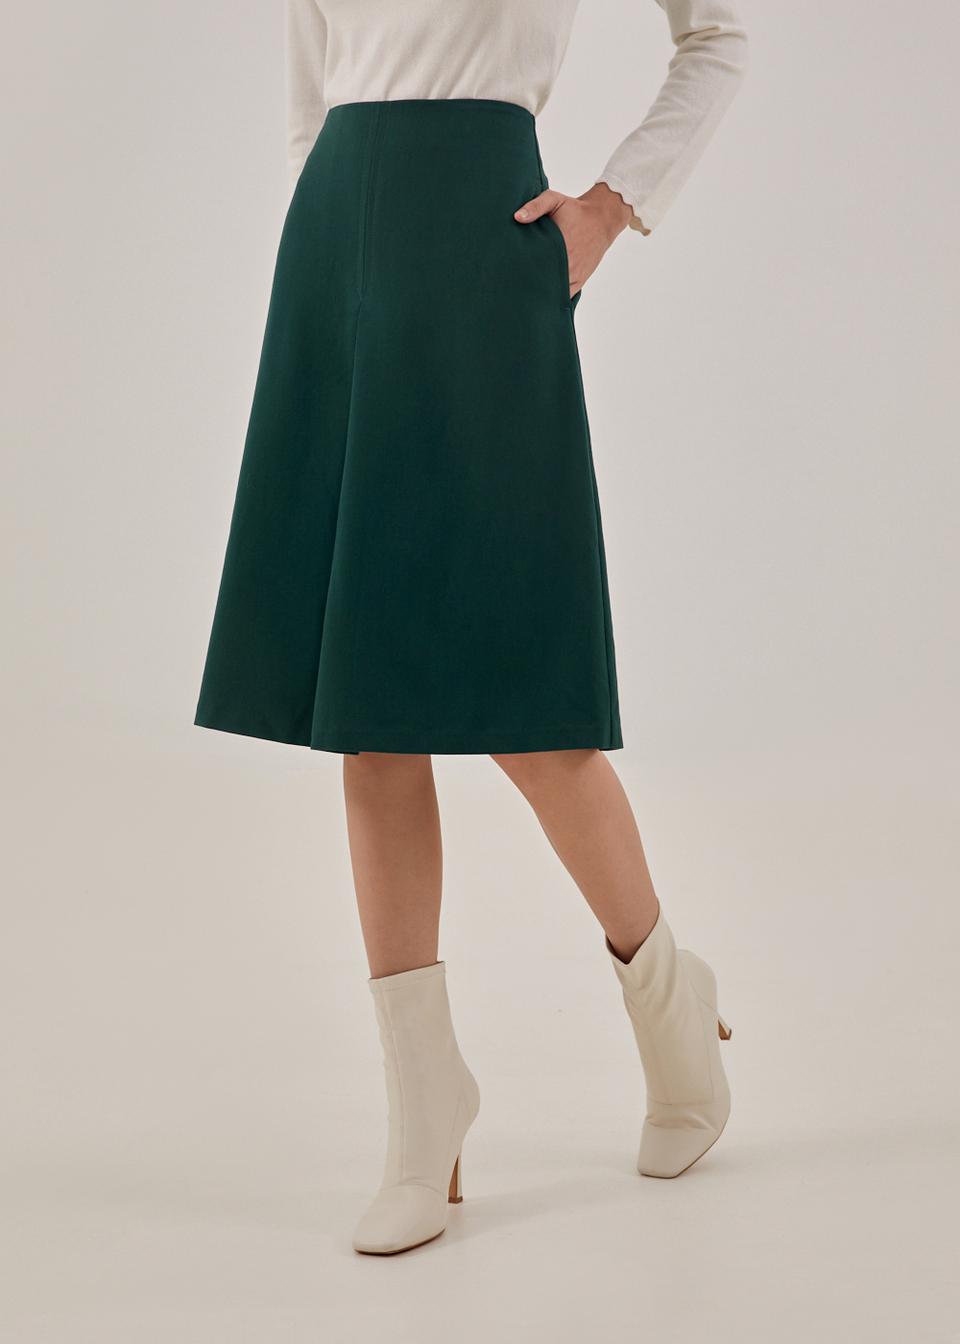 Buy Delanie A-line Midi Skirt @ Love, Bonito Singapore